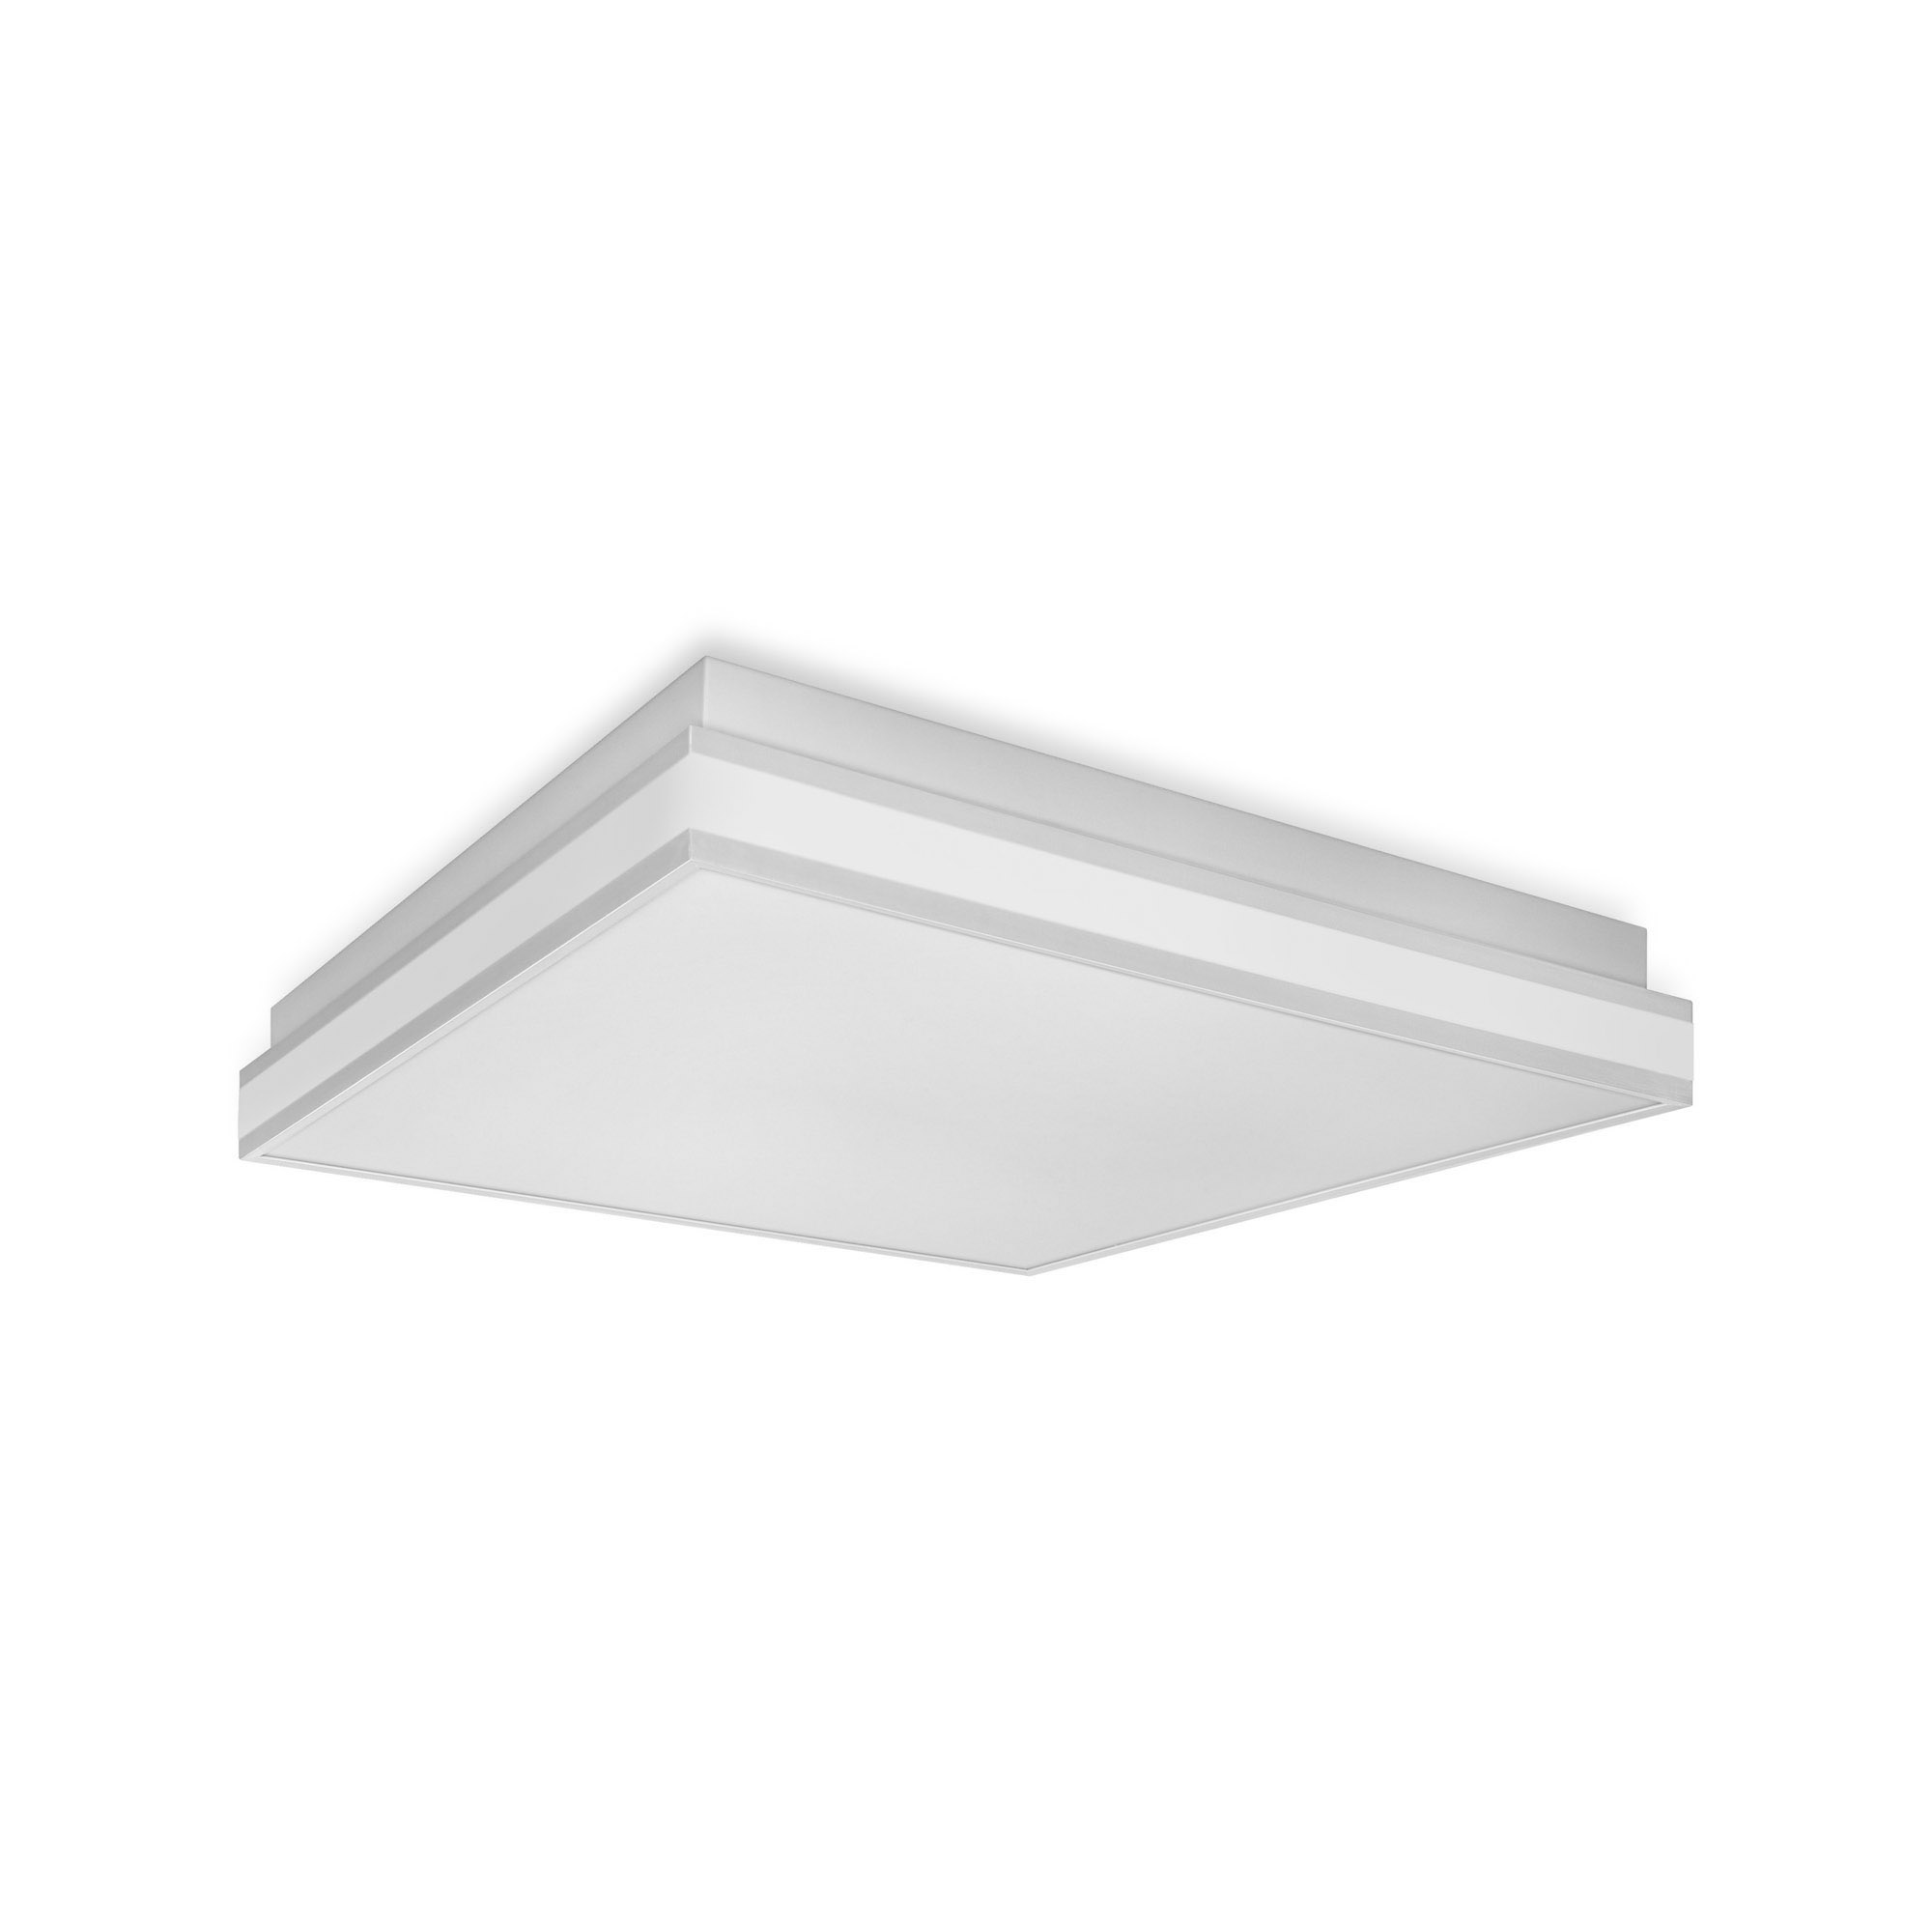 LEDVANCE SMART+ WiFi Tunable White LED Ceiling Light ORBIS MAGNET 600x300mm grey 4200lm